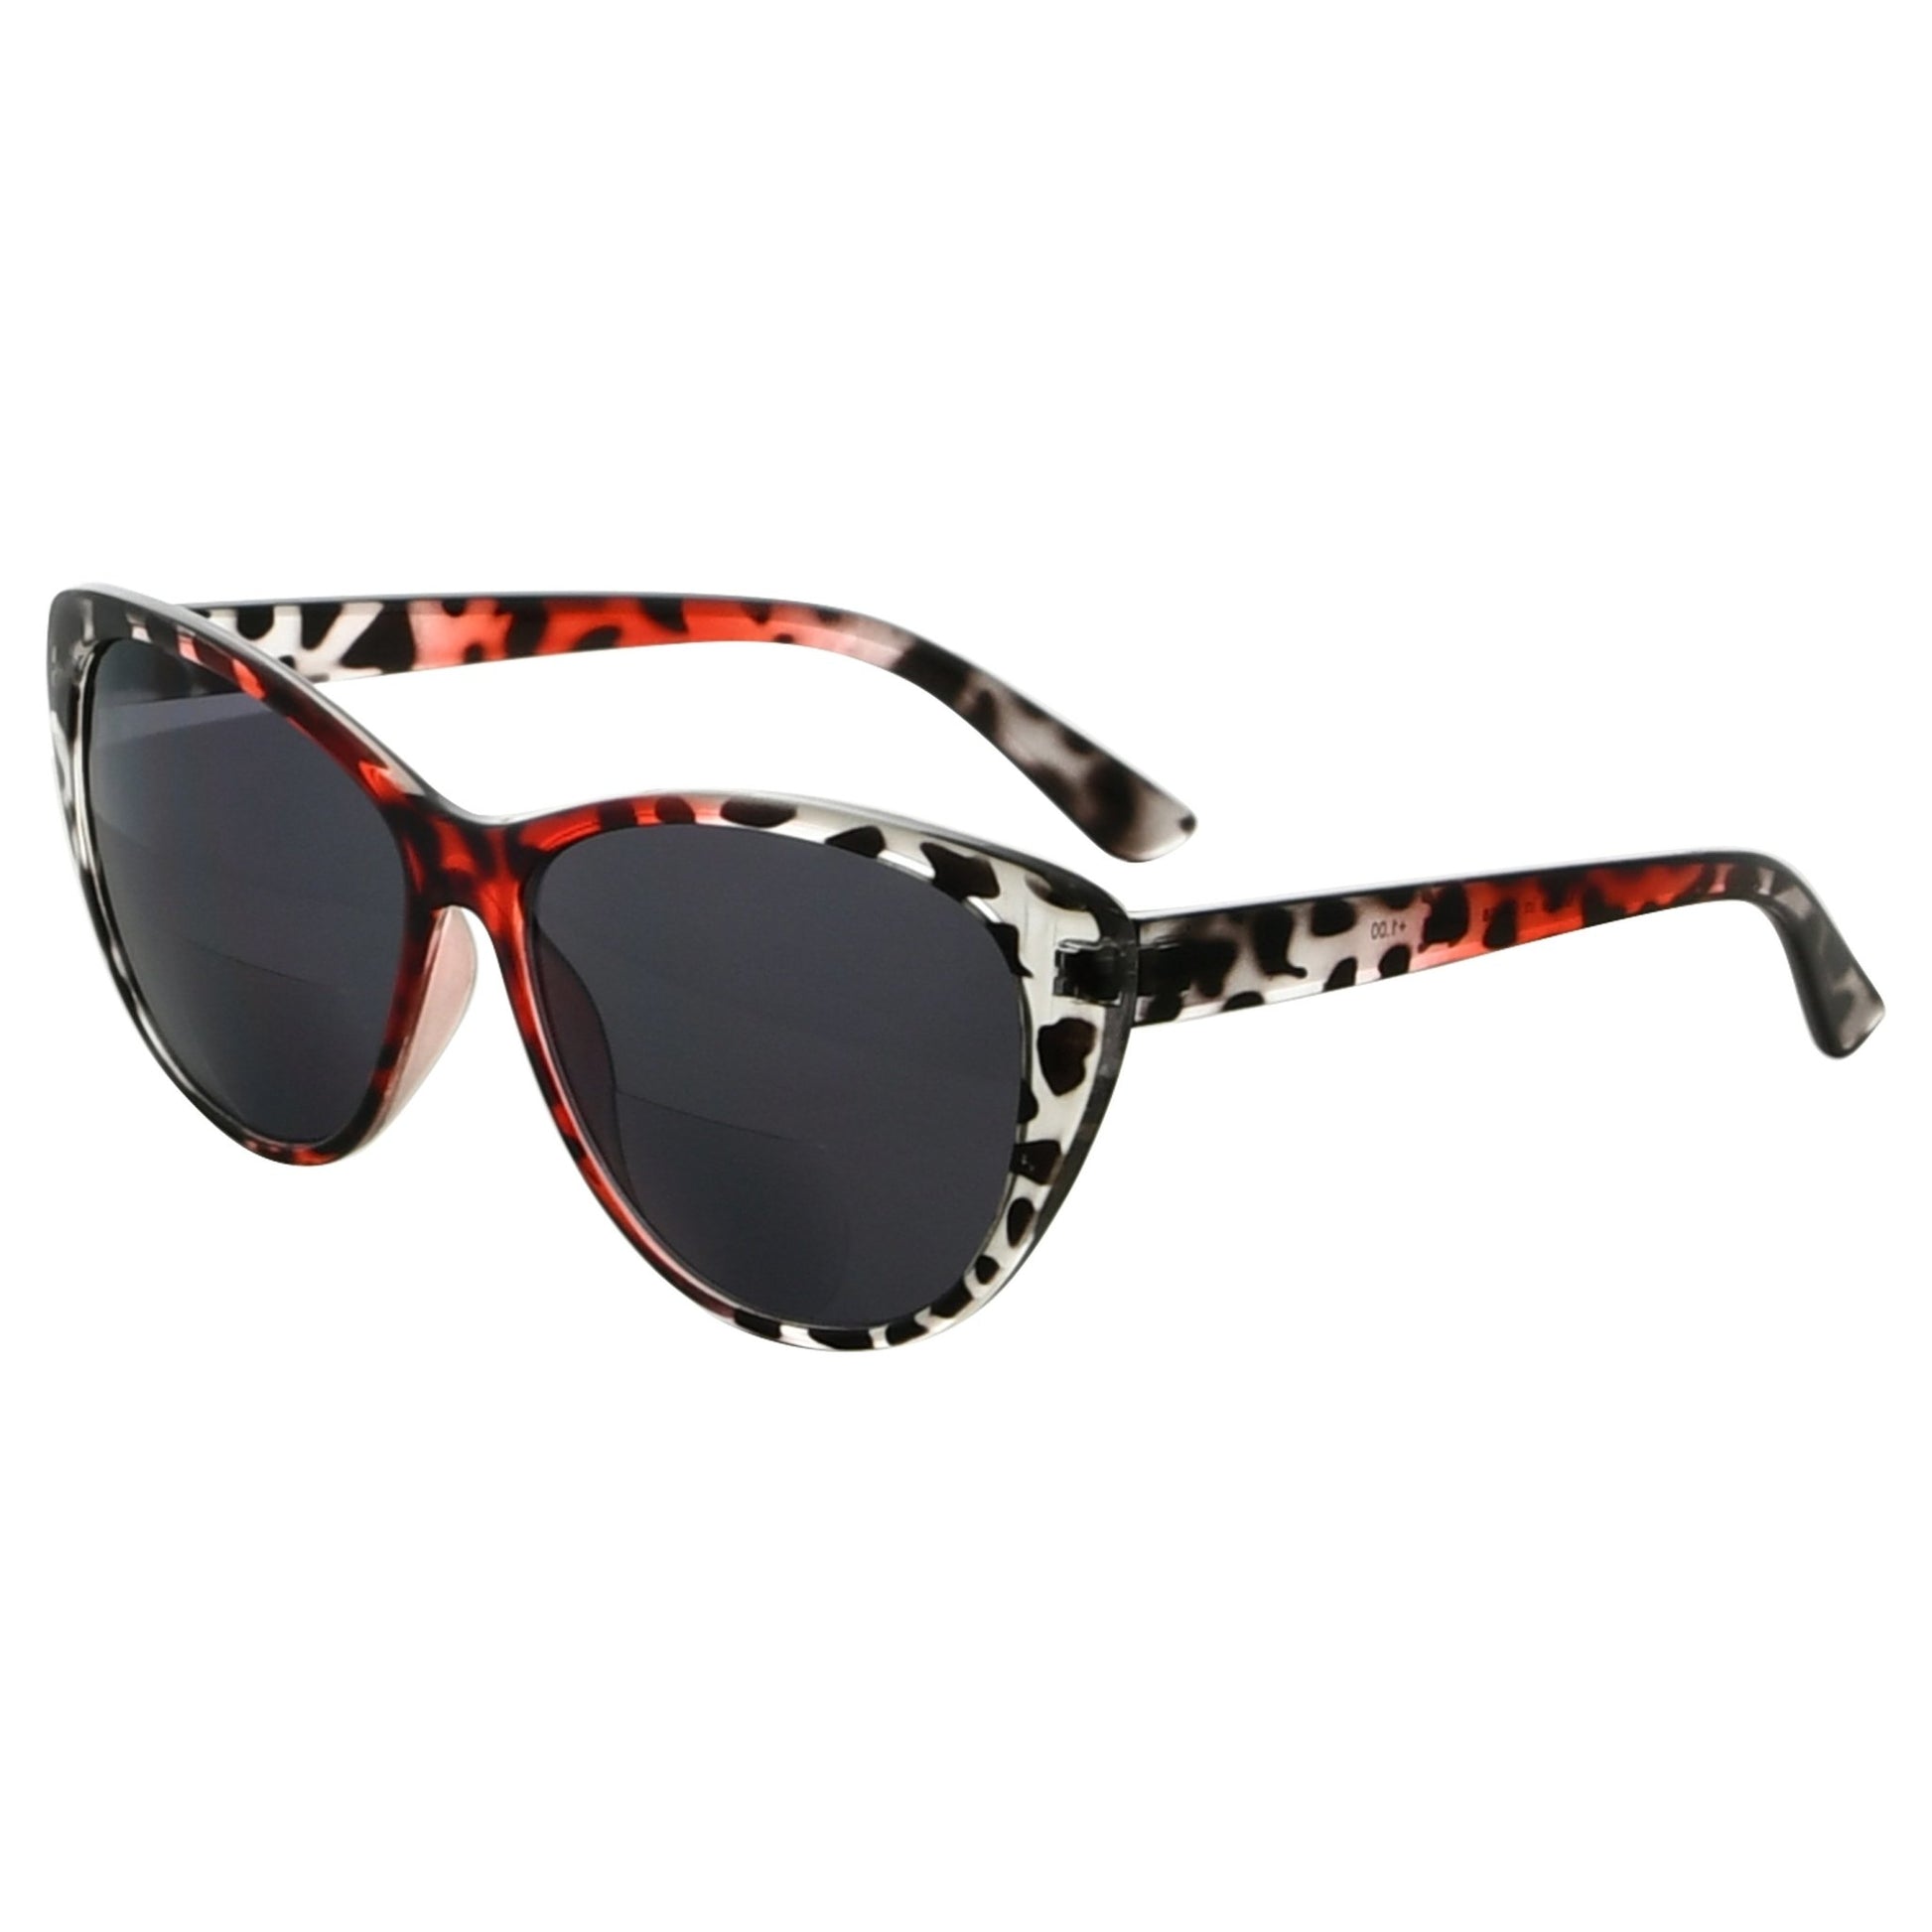 Bifocal Sunglasses Distinctive Cat-eye Design for Women S033